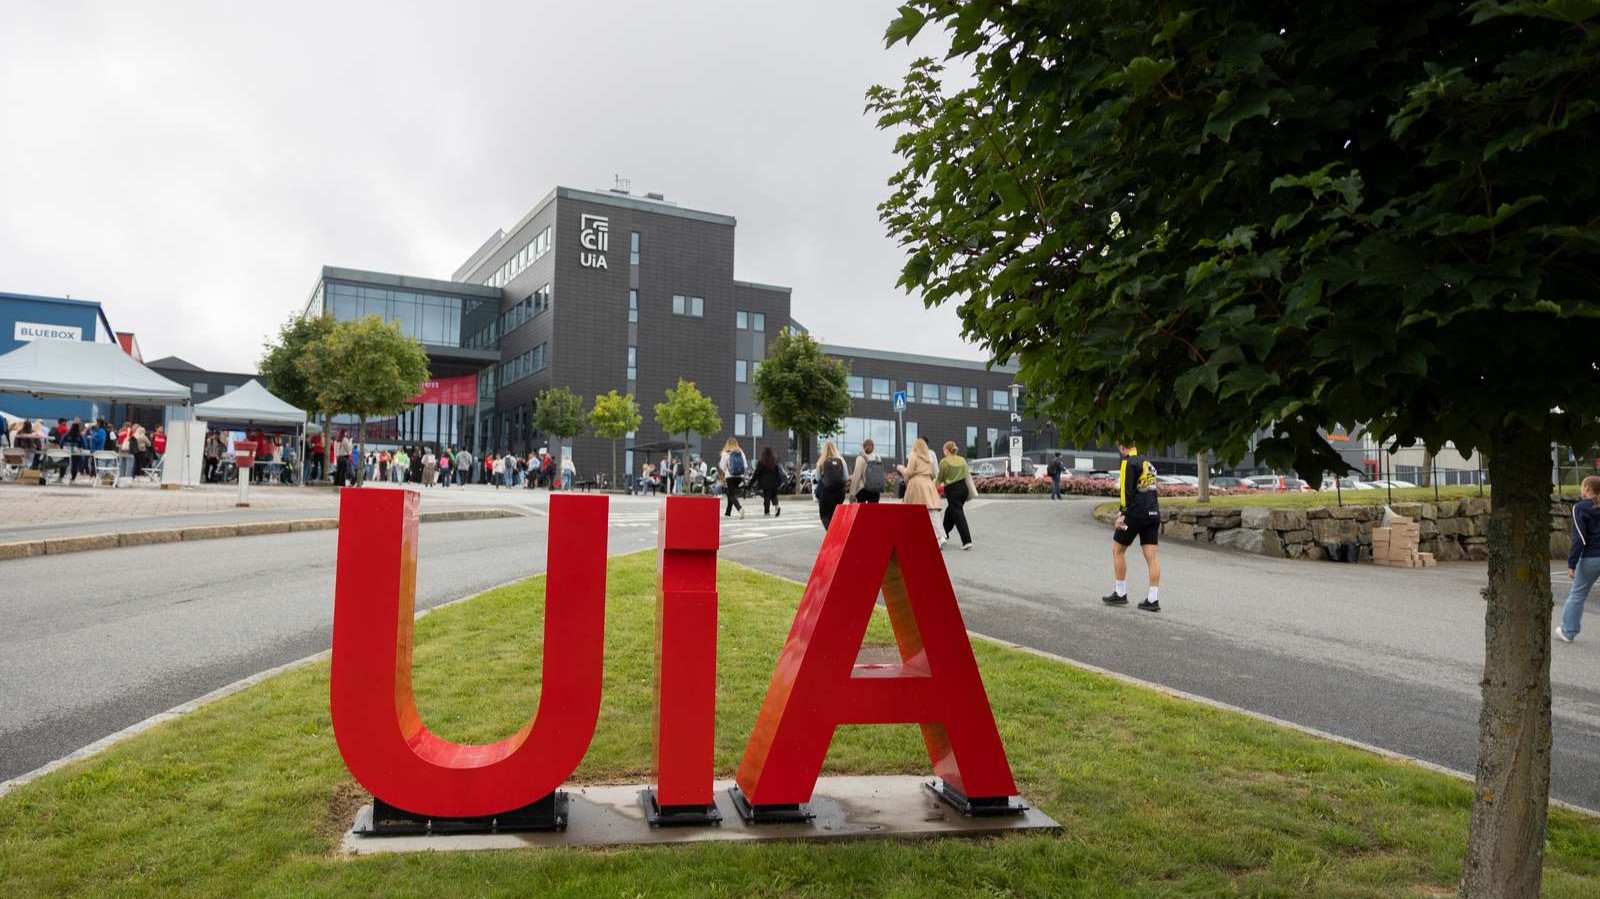 Bilde tatt foran UiA Campus Grimstad. Røde, utskårne UiA-bokstaver i forgrunnen.